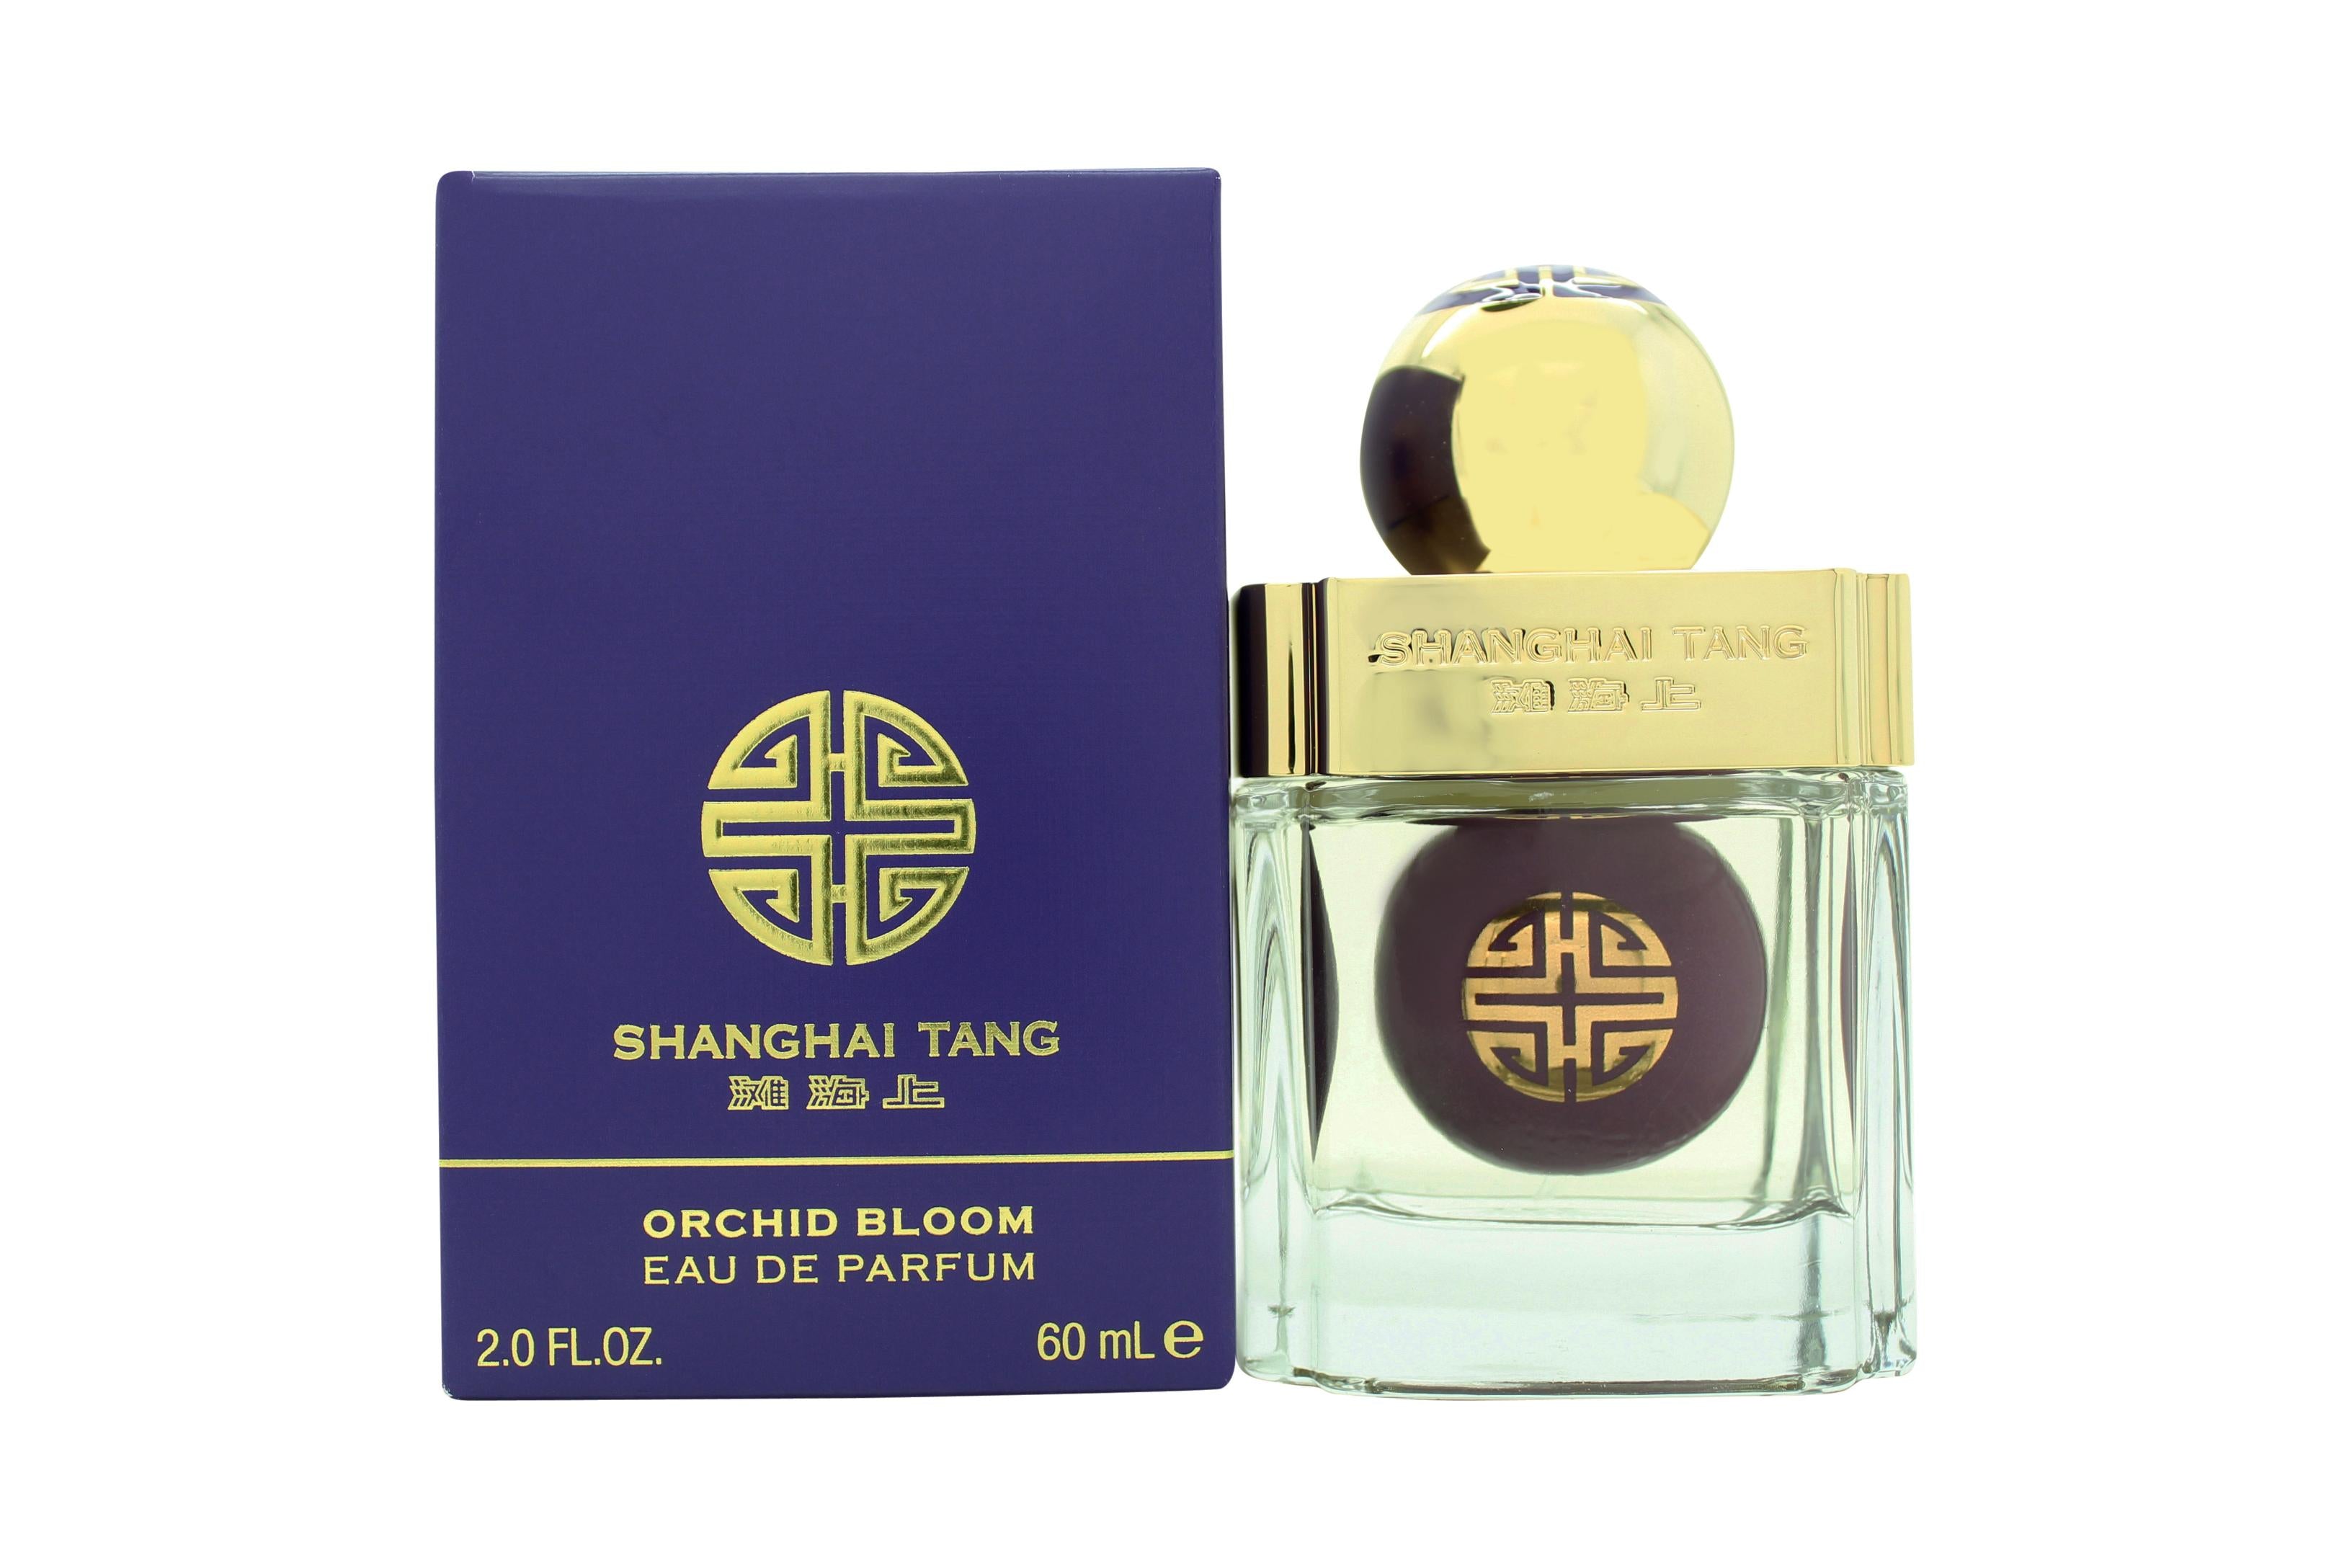 View Shanghai Tang Orchid Bloom Eau de Parfum 60ml Spray information